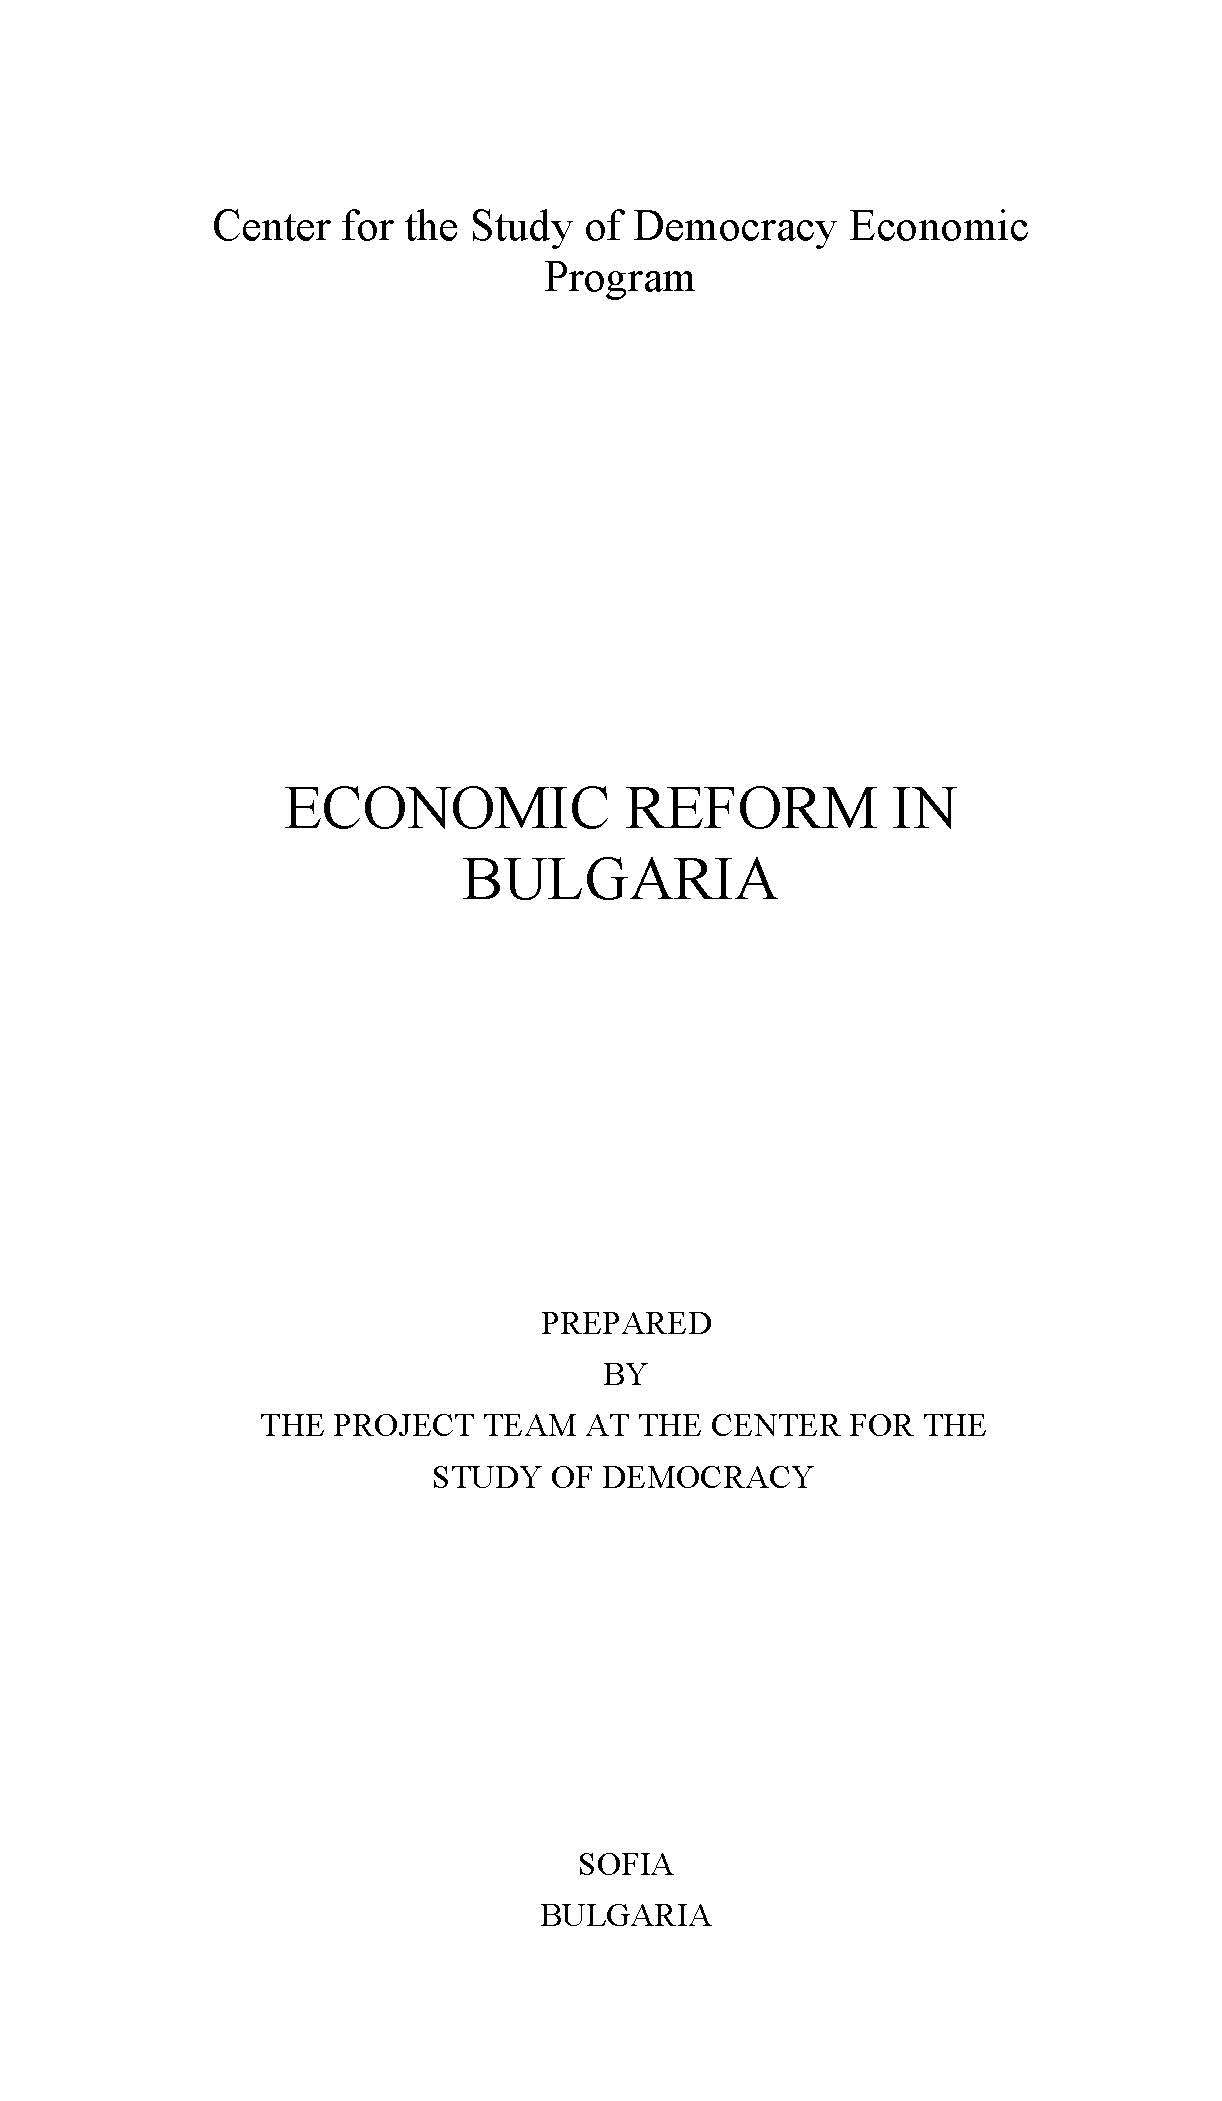 Economic reform in Bulgaria